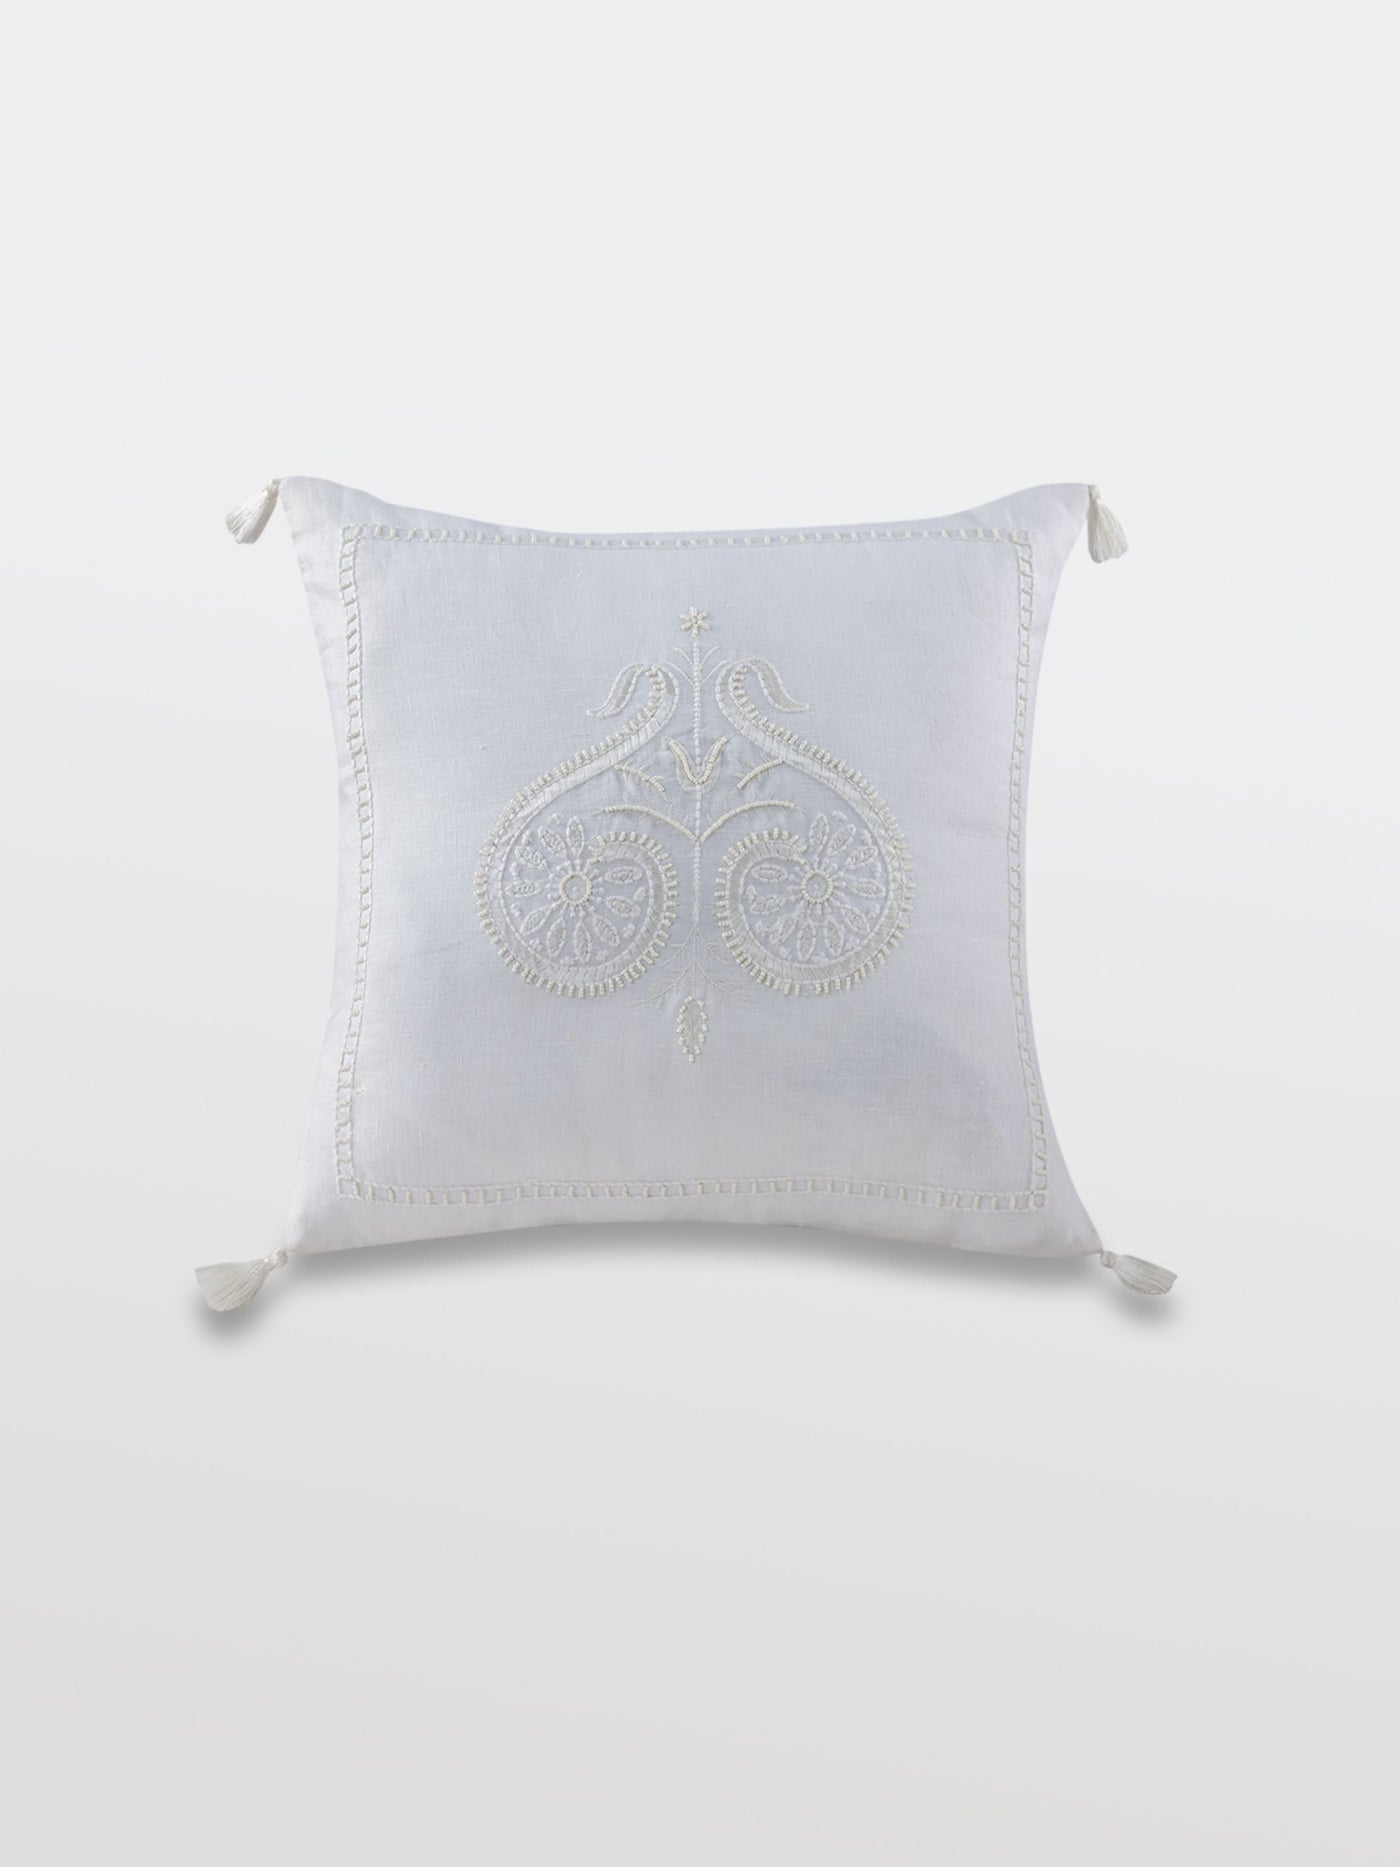 Cushion Cover - Numaish White